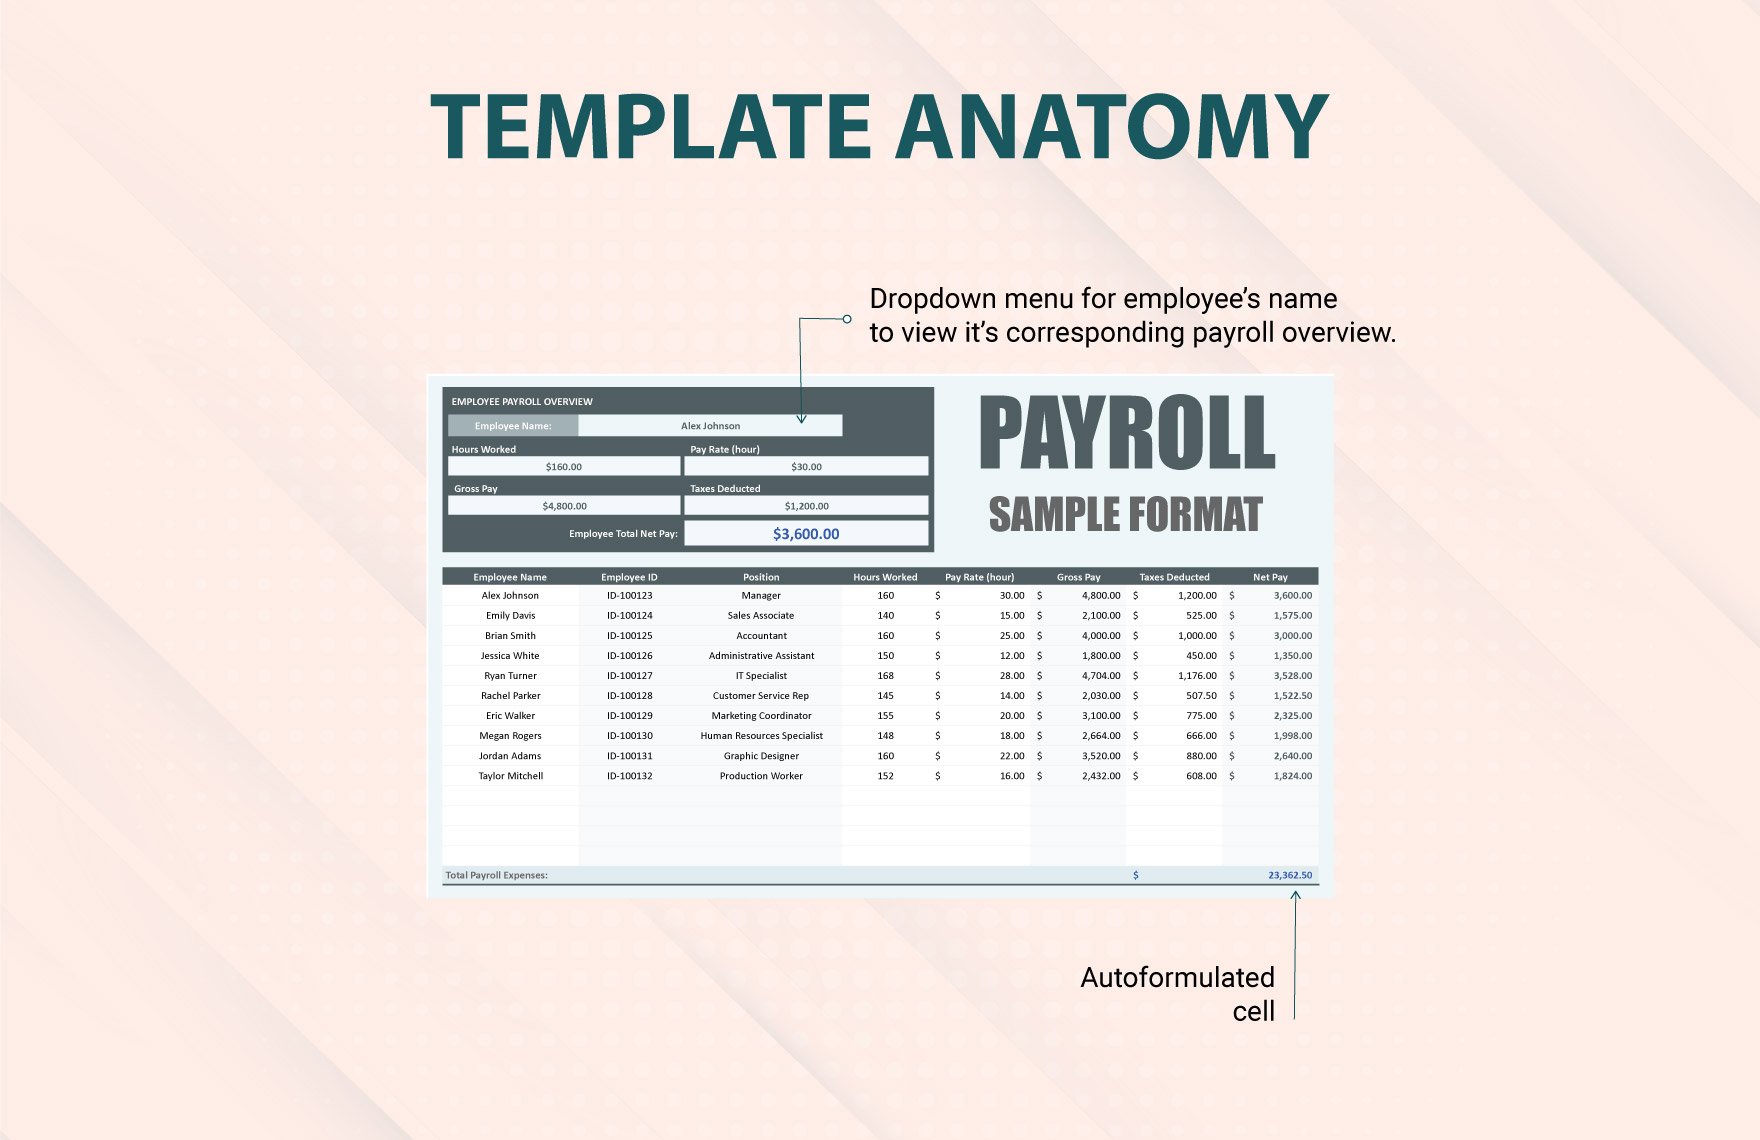 Payroll Sample Format Template